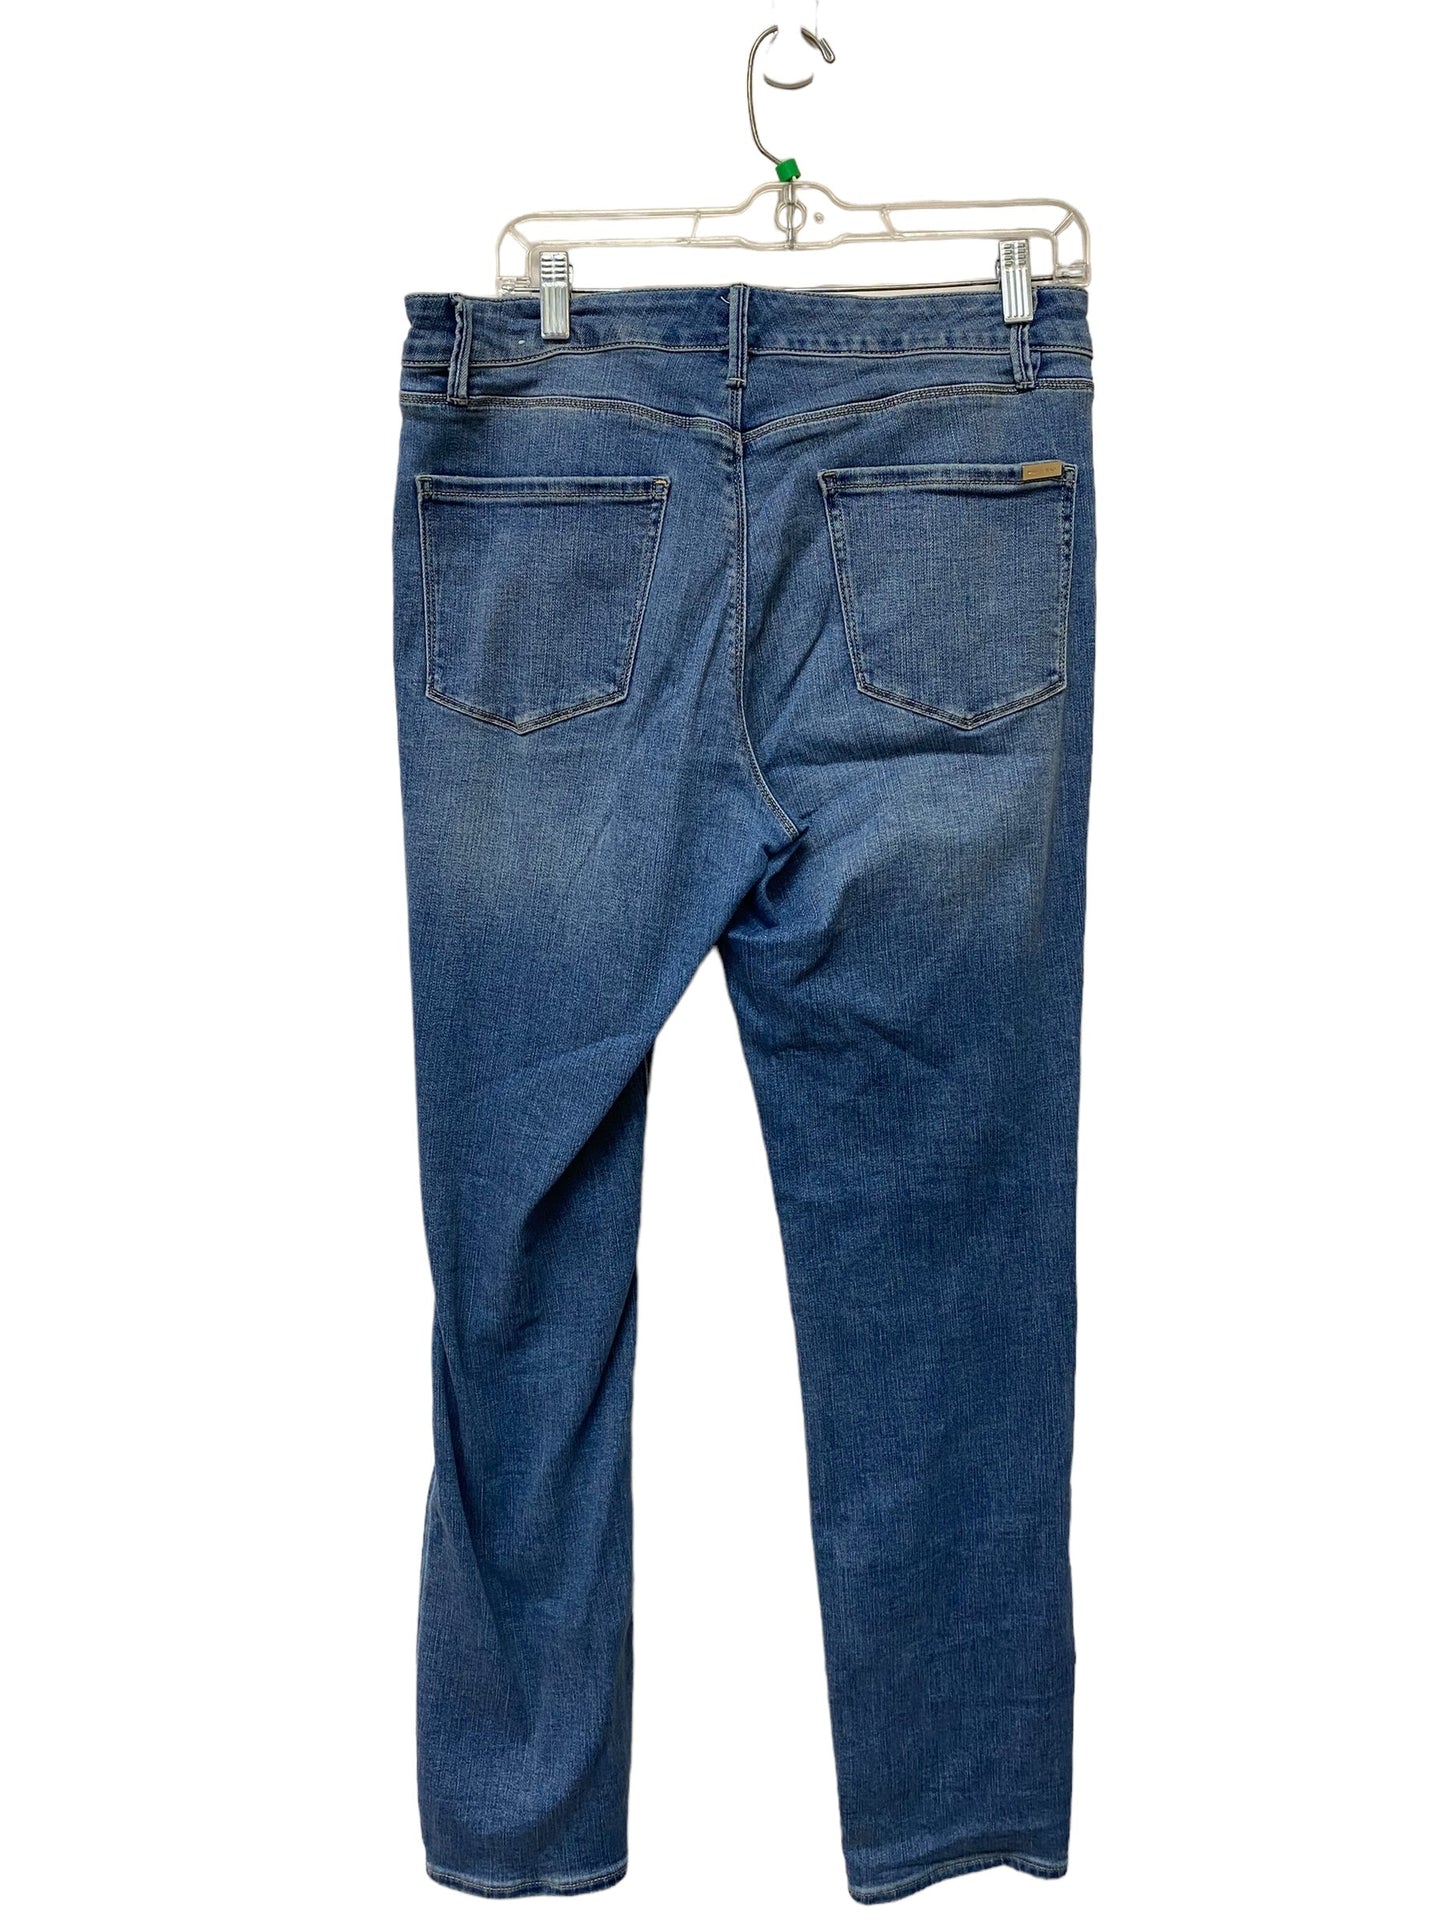 Jeans Skinny By White House Black Market  Size: 14